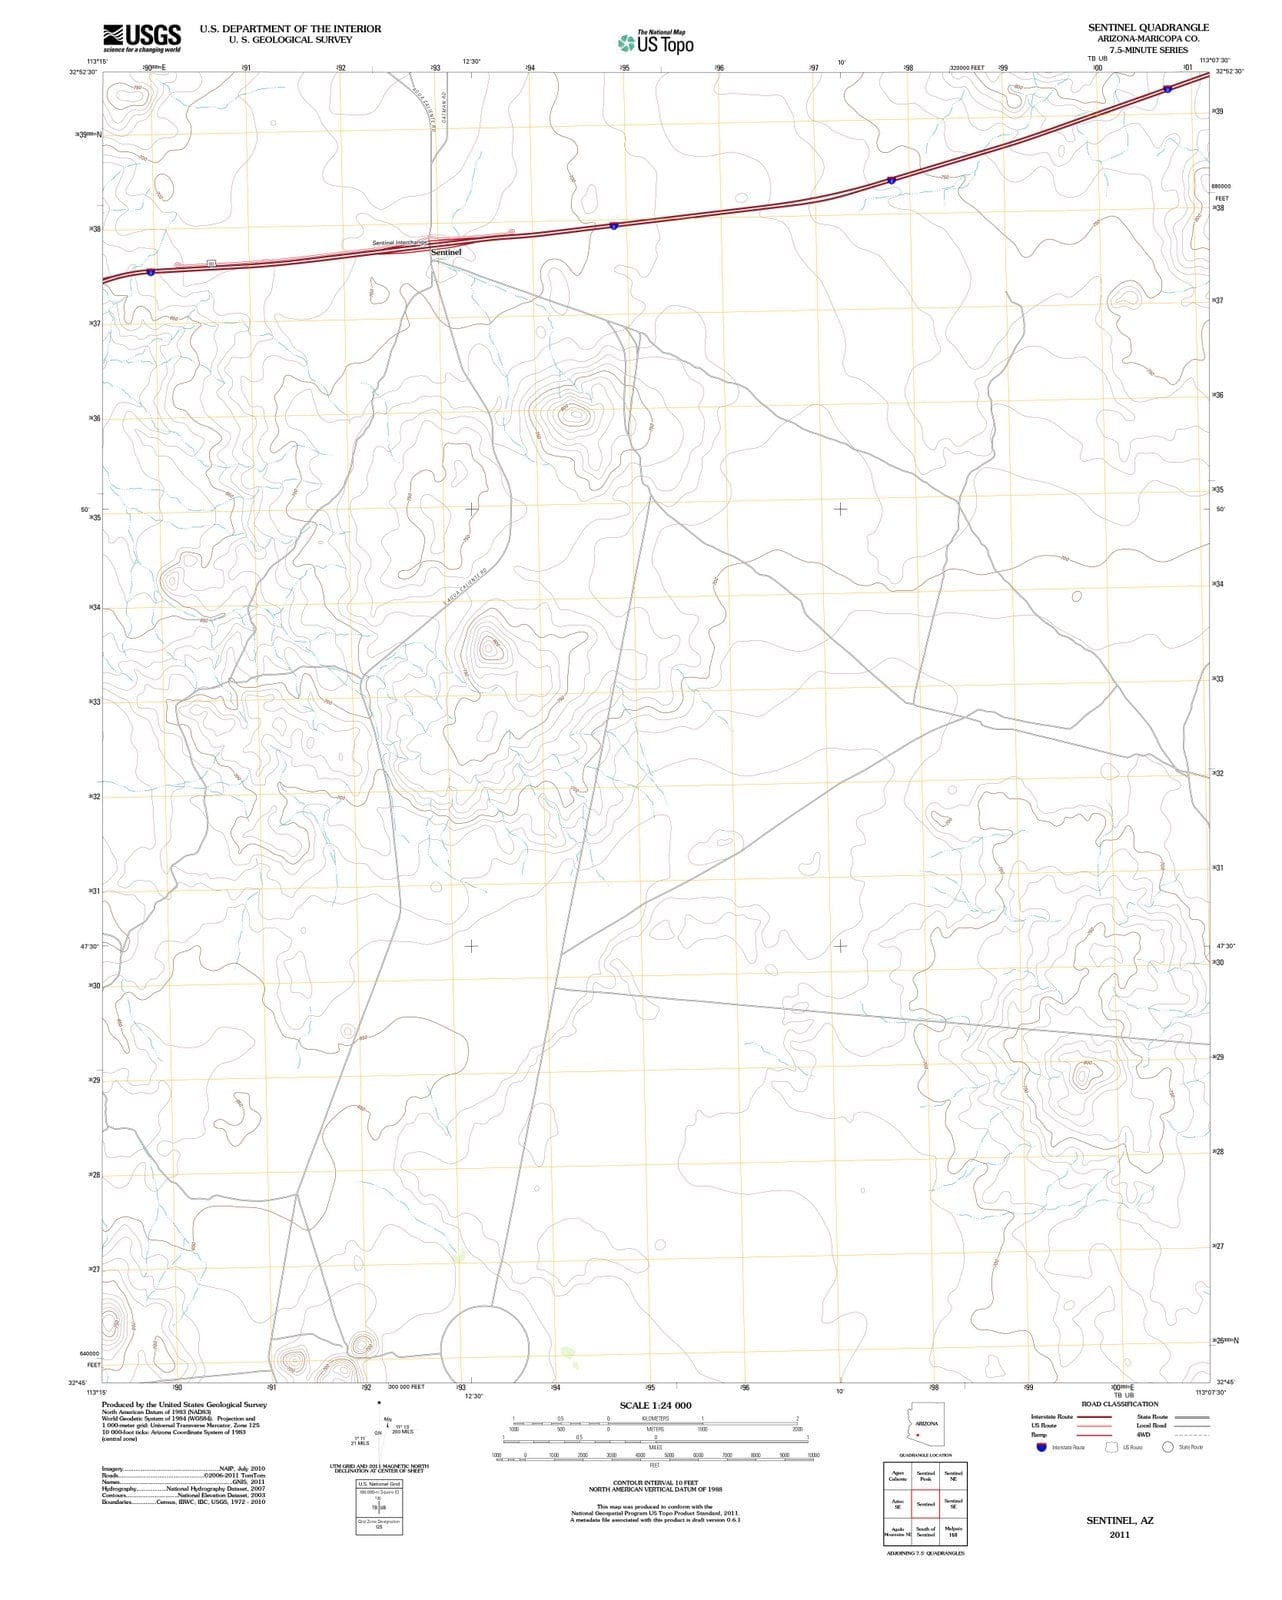 2011 Sentinel, AZ - Arizona - USGS Topographic Map